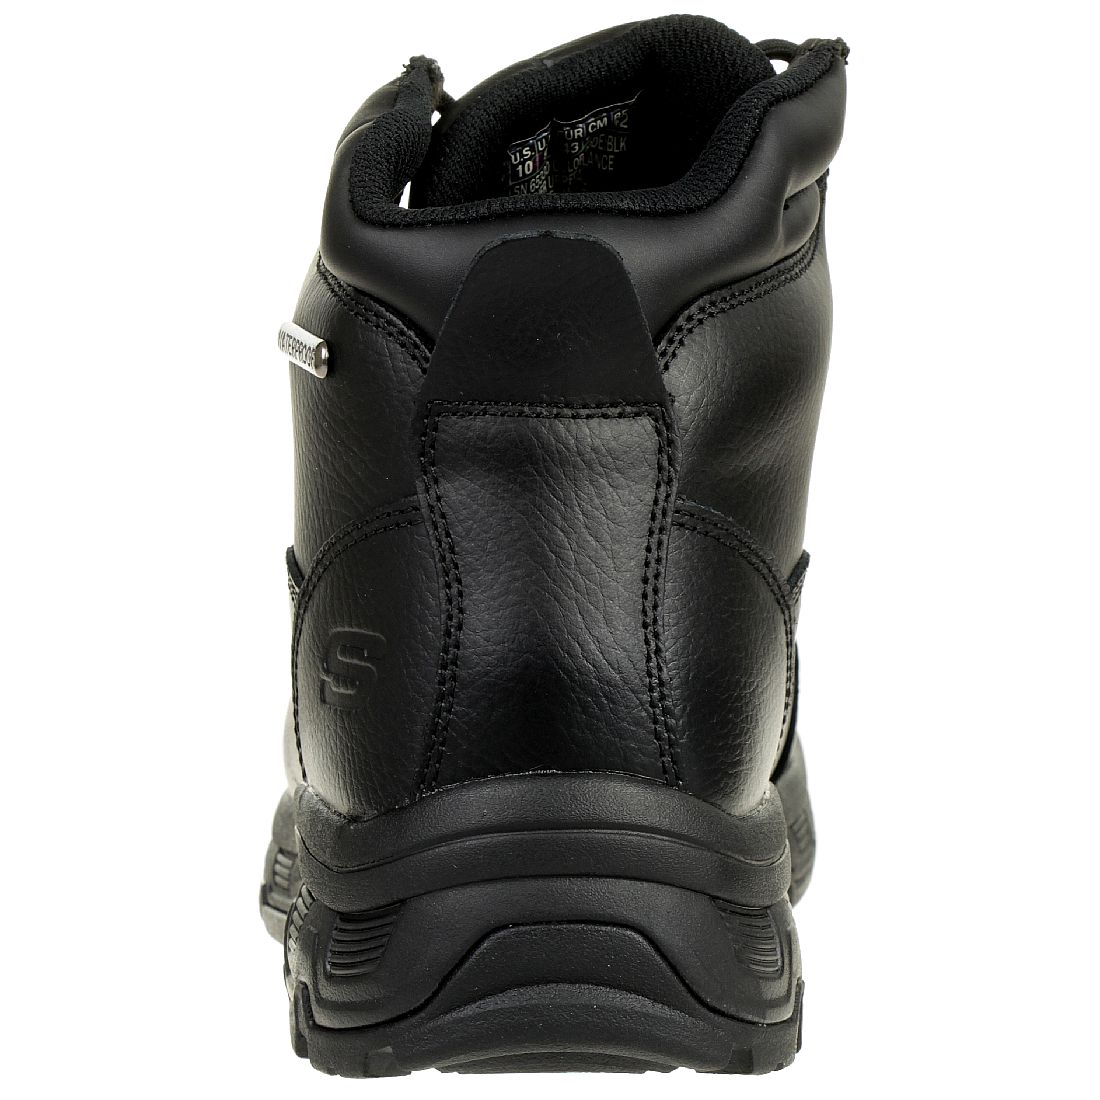 Skechers Morson SINATRO Stiefel Outdoor Schuhe Waterproof Leder RELAXED FIT BLK